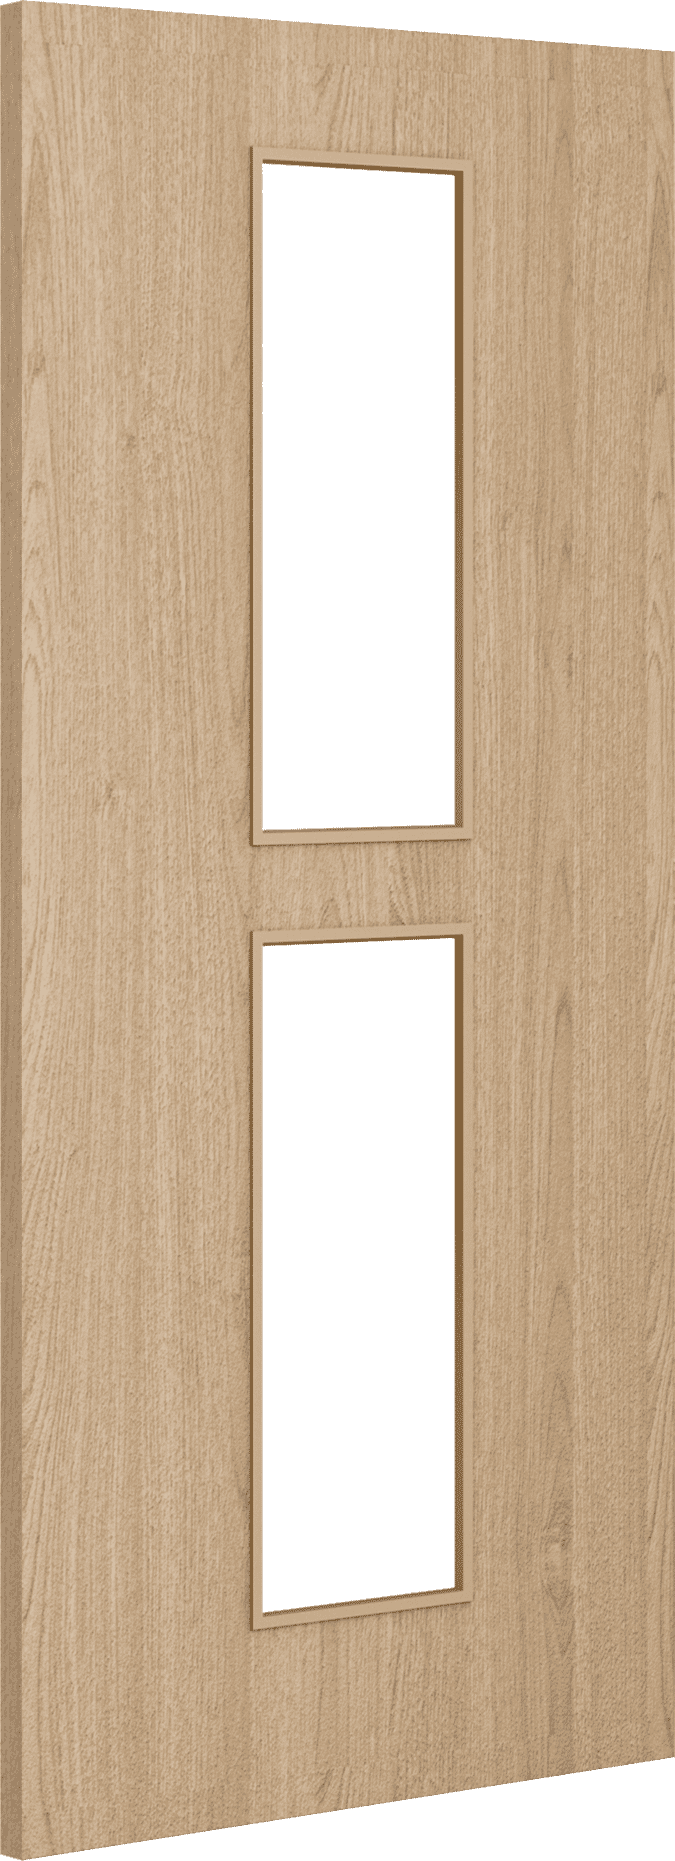 2040mm x 726mm x 44mm Architectural Oak 12 Frosted Glazed - Prefinished FD30 Fire Door Blank